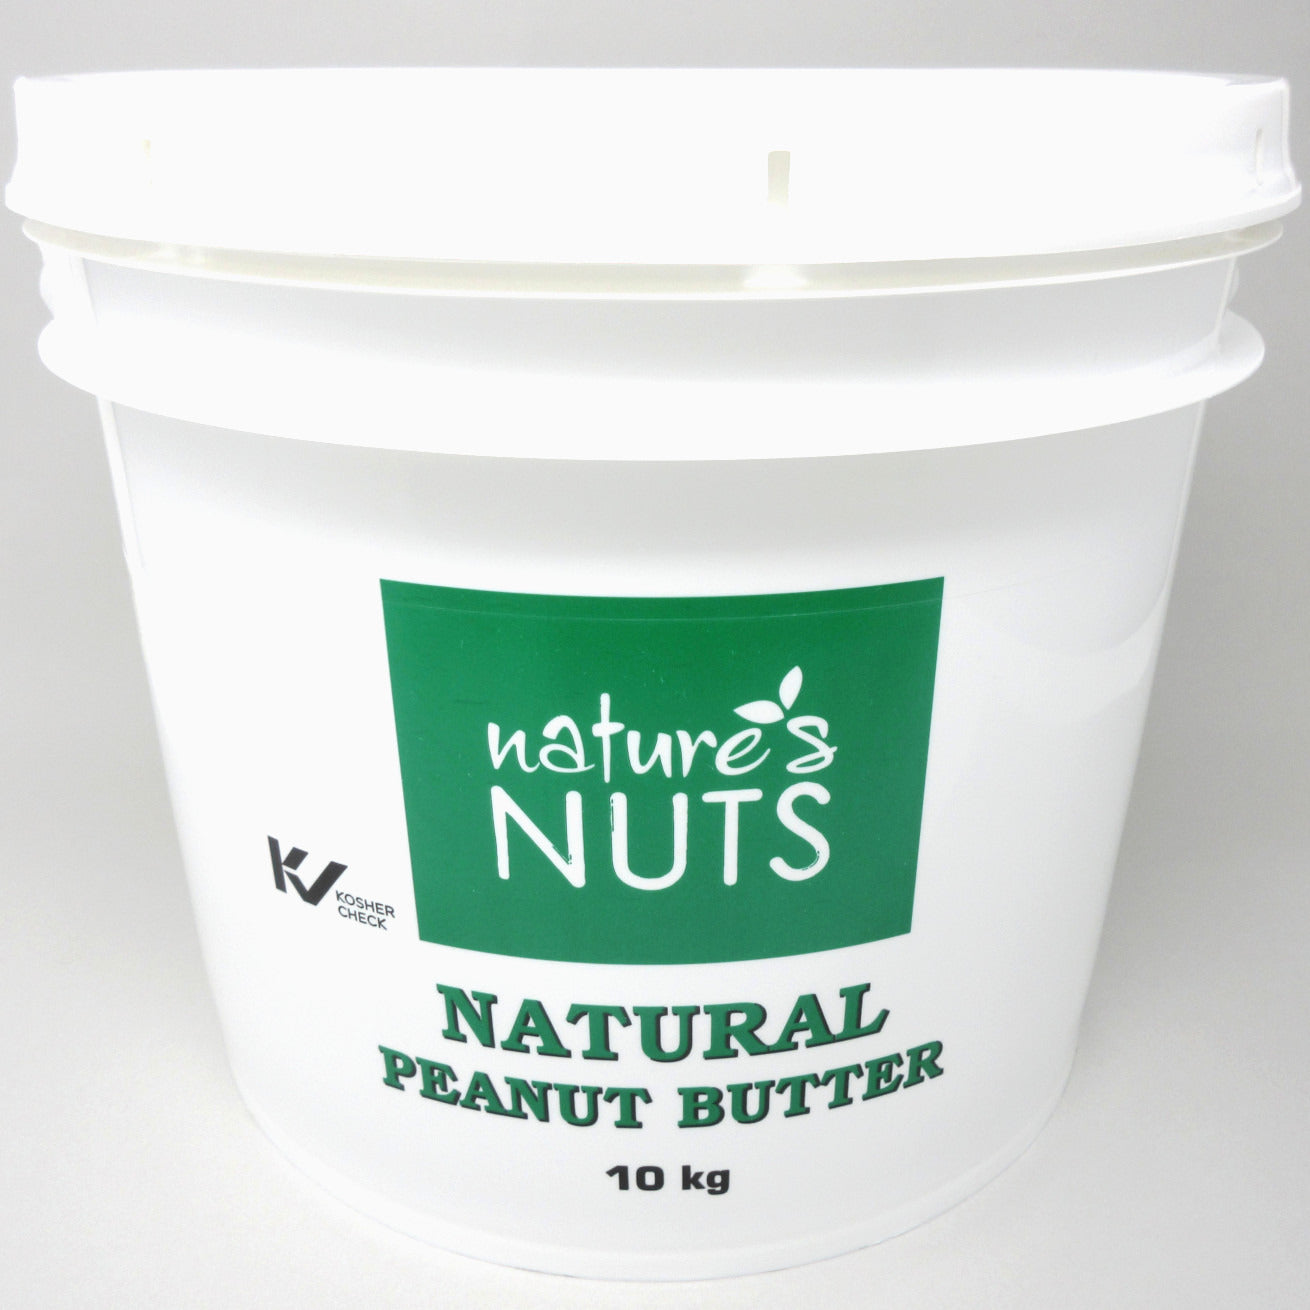 Flour Barrel product image - Natural Peanut Butter